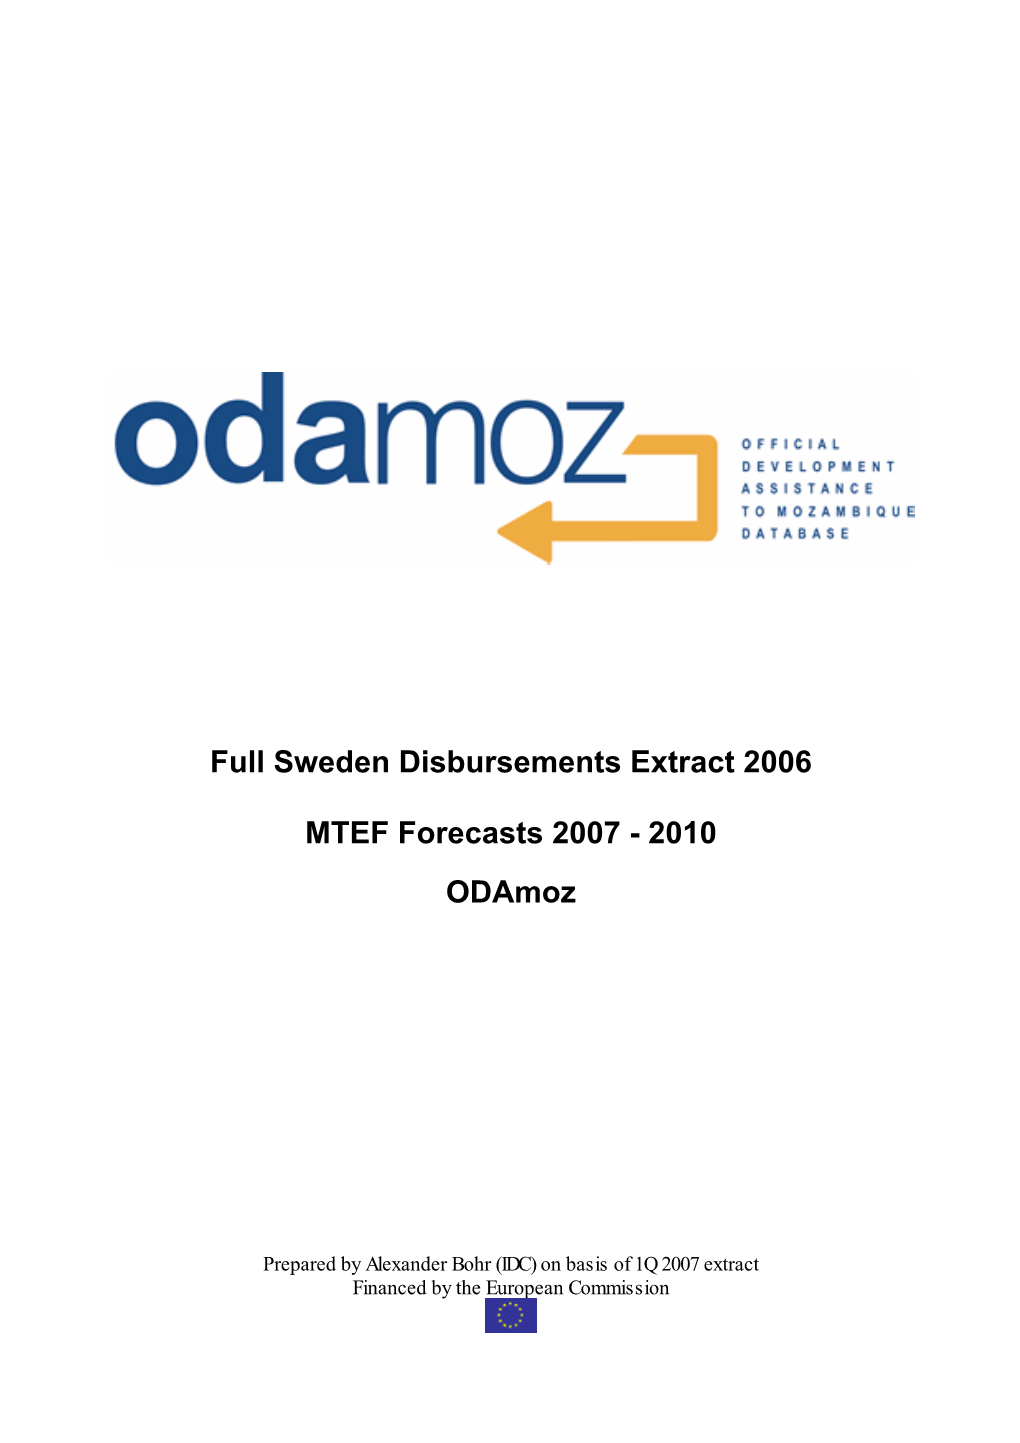 Full Sweden Disbursements Extract 2006 MTEF Forecasts 2007